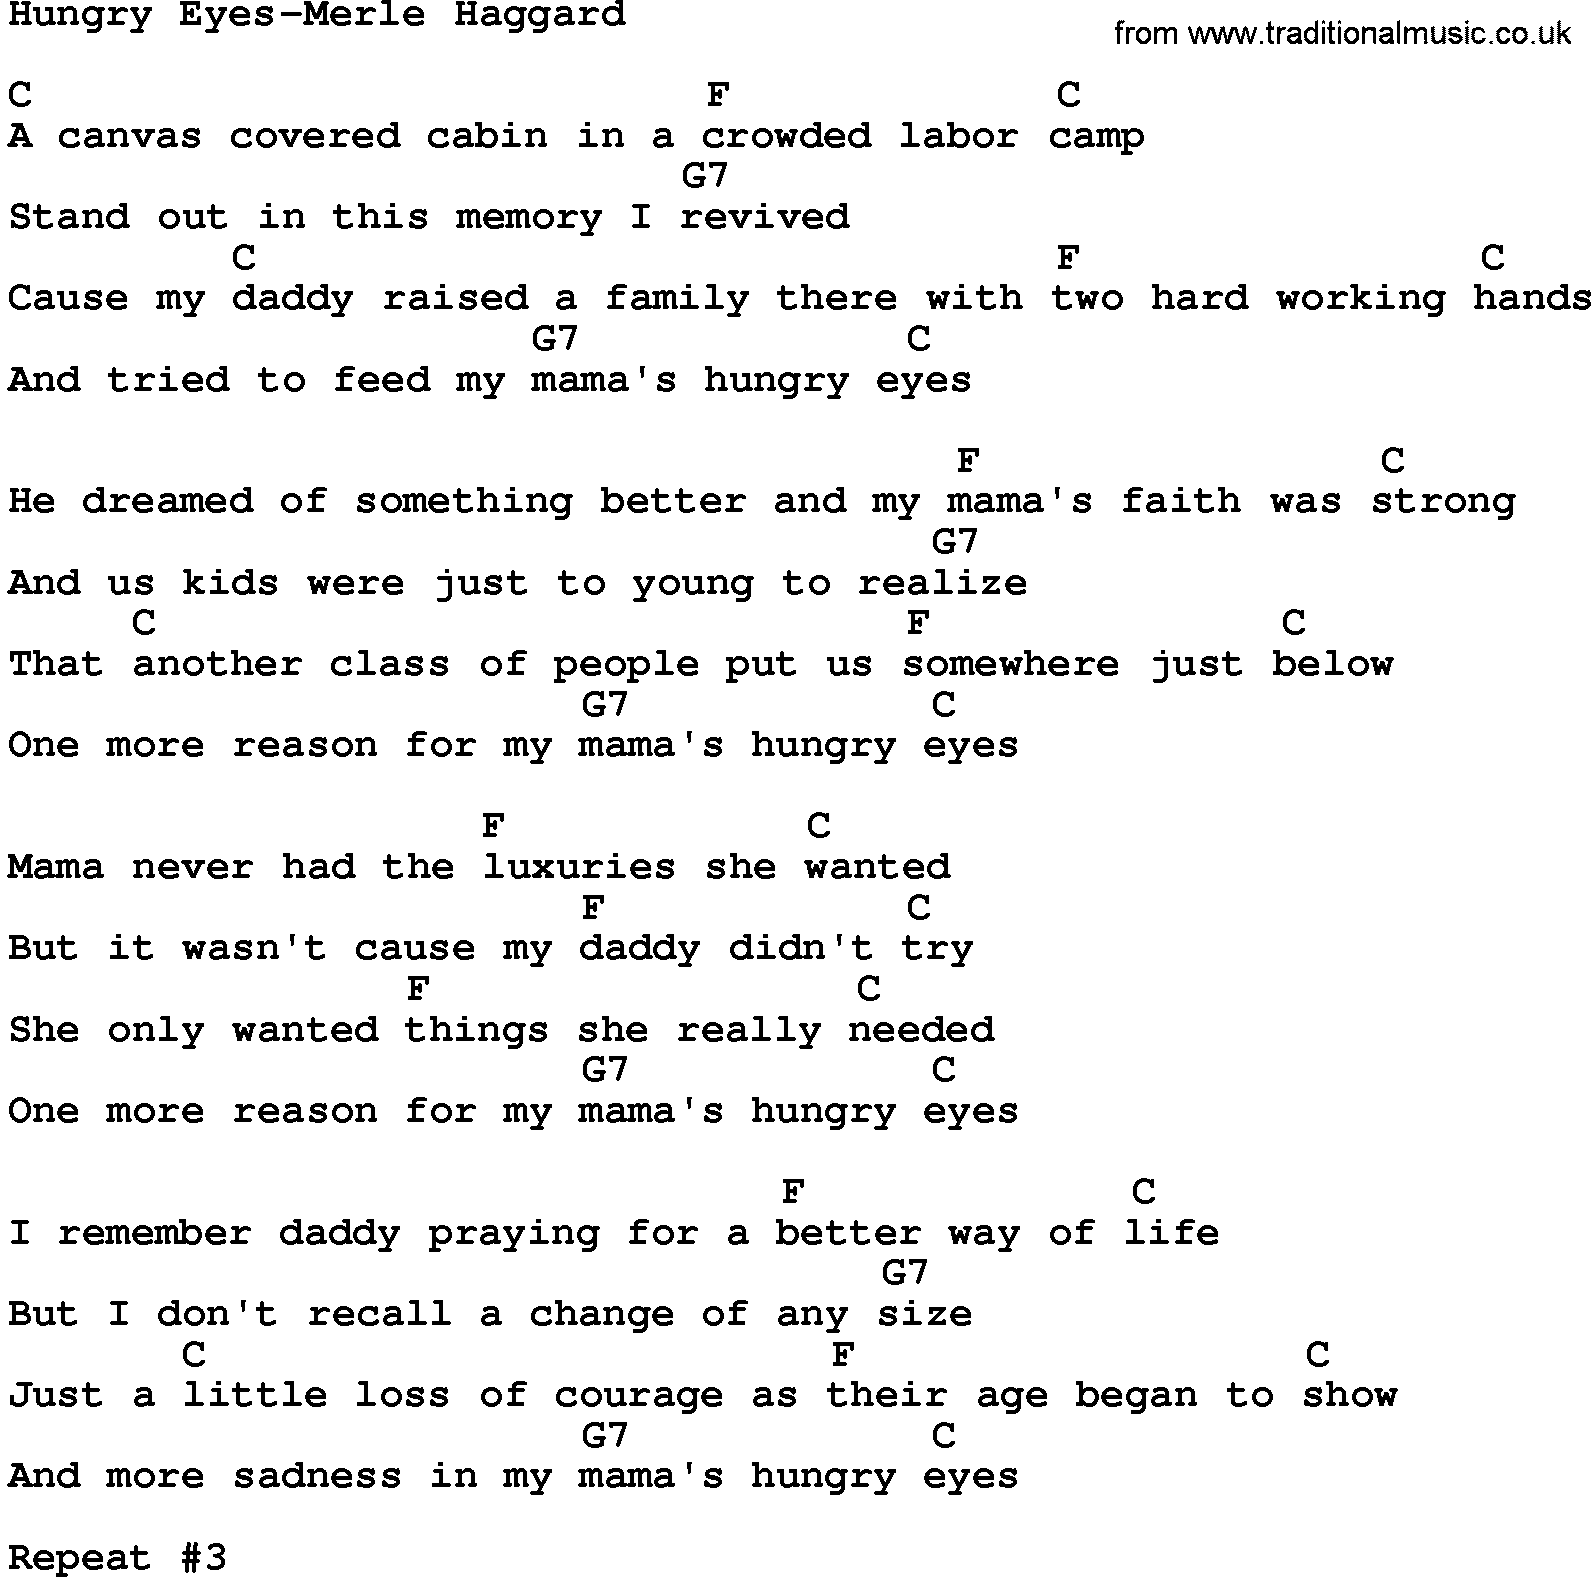 Country music song: Hungry Eyes-Merle Haggard lyrics and chords